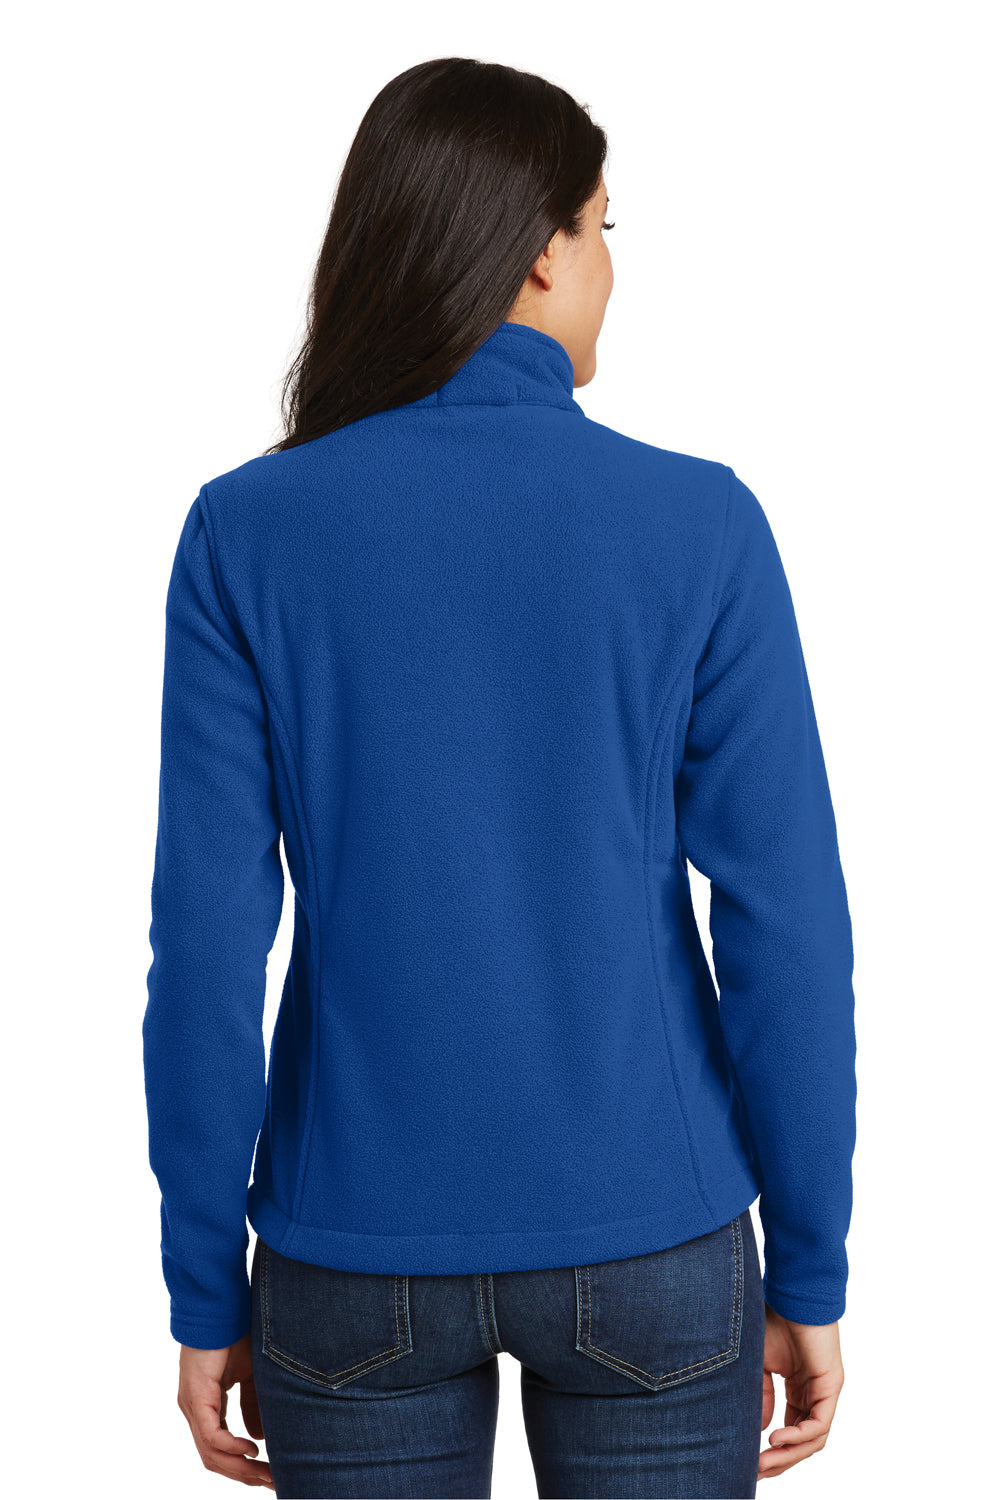 Port Authority L217 Womens Full Zip Fleece Jacket Royal Blue Back